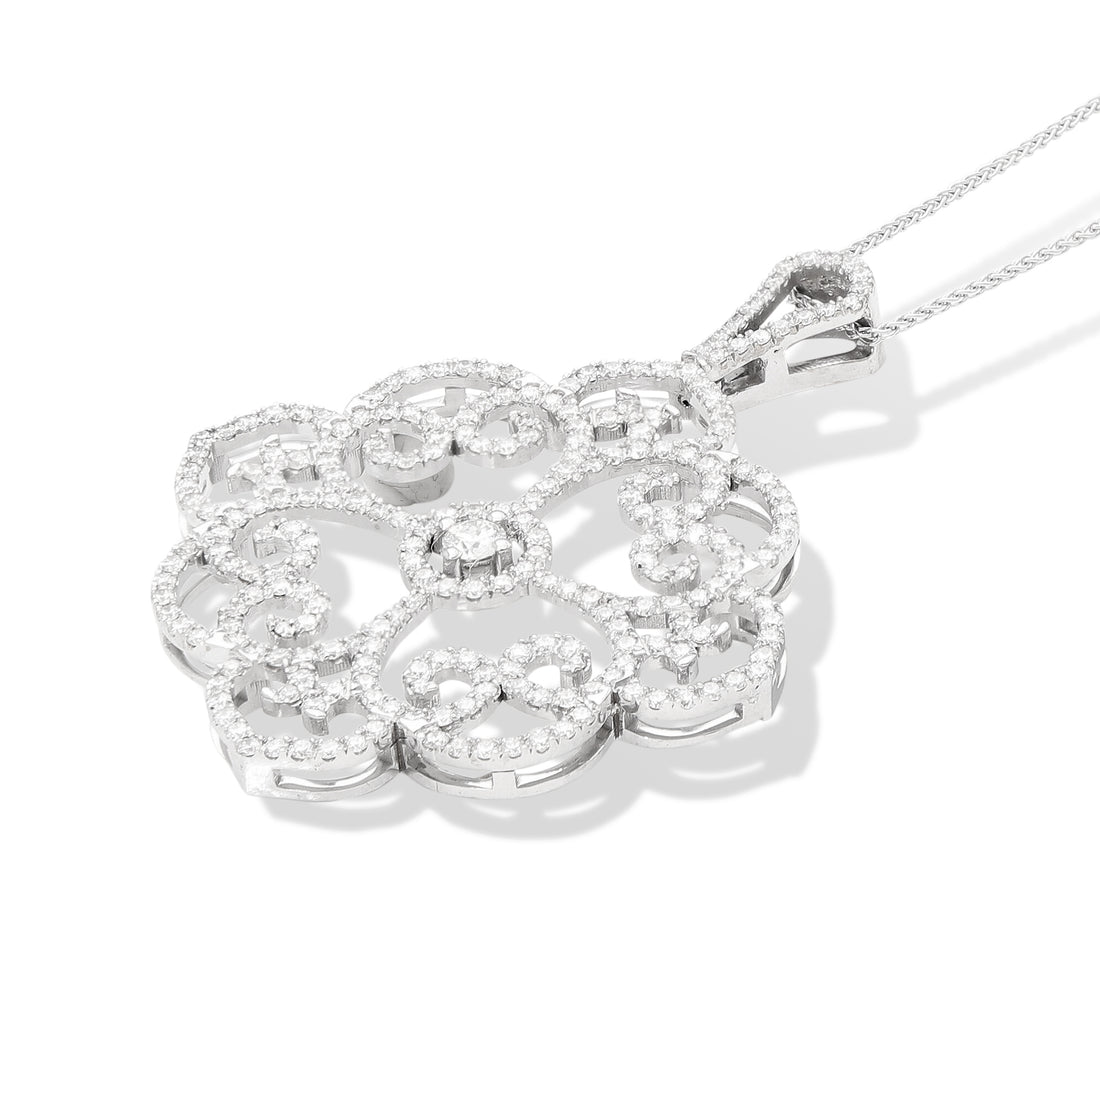 Pave Lined Filigree Pendant Diamond Necklace - 1.49 Carat